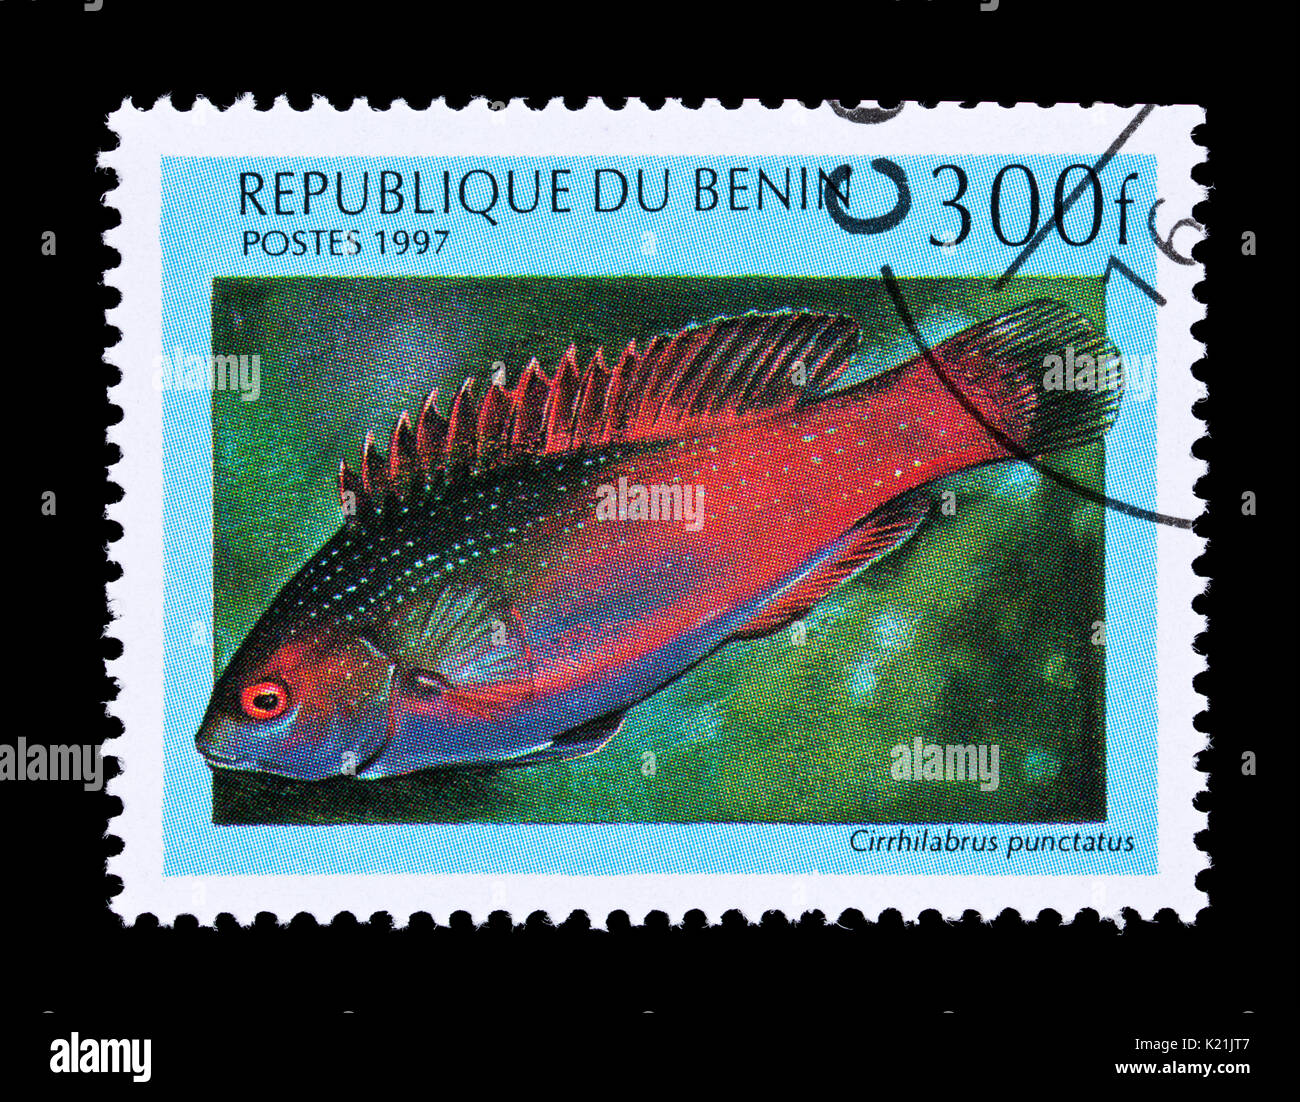 Postage stamp from Benin depicting a Finespot Wrasse (Cirrhilabrus punctatus) Stock Photo